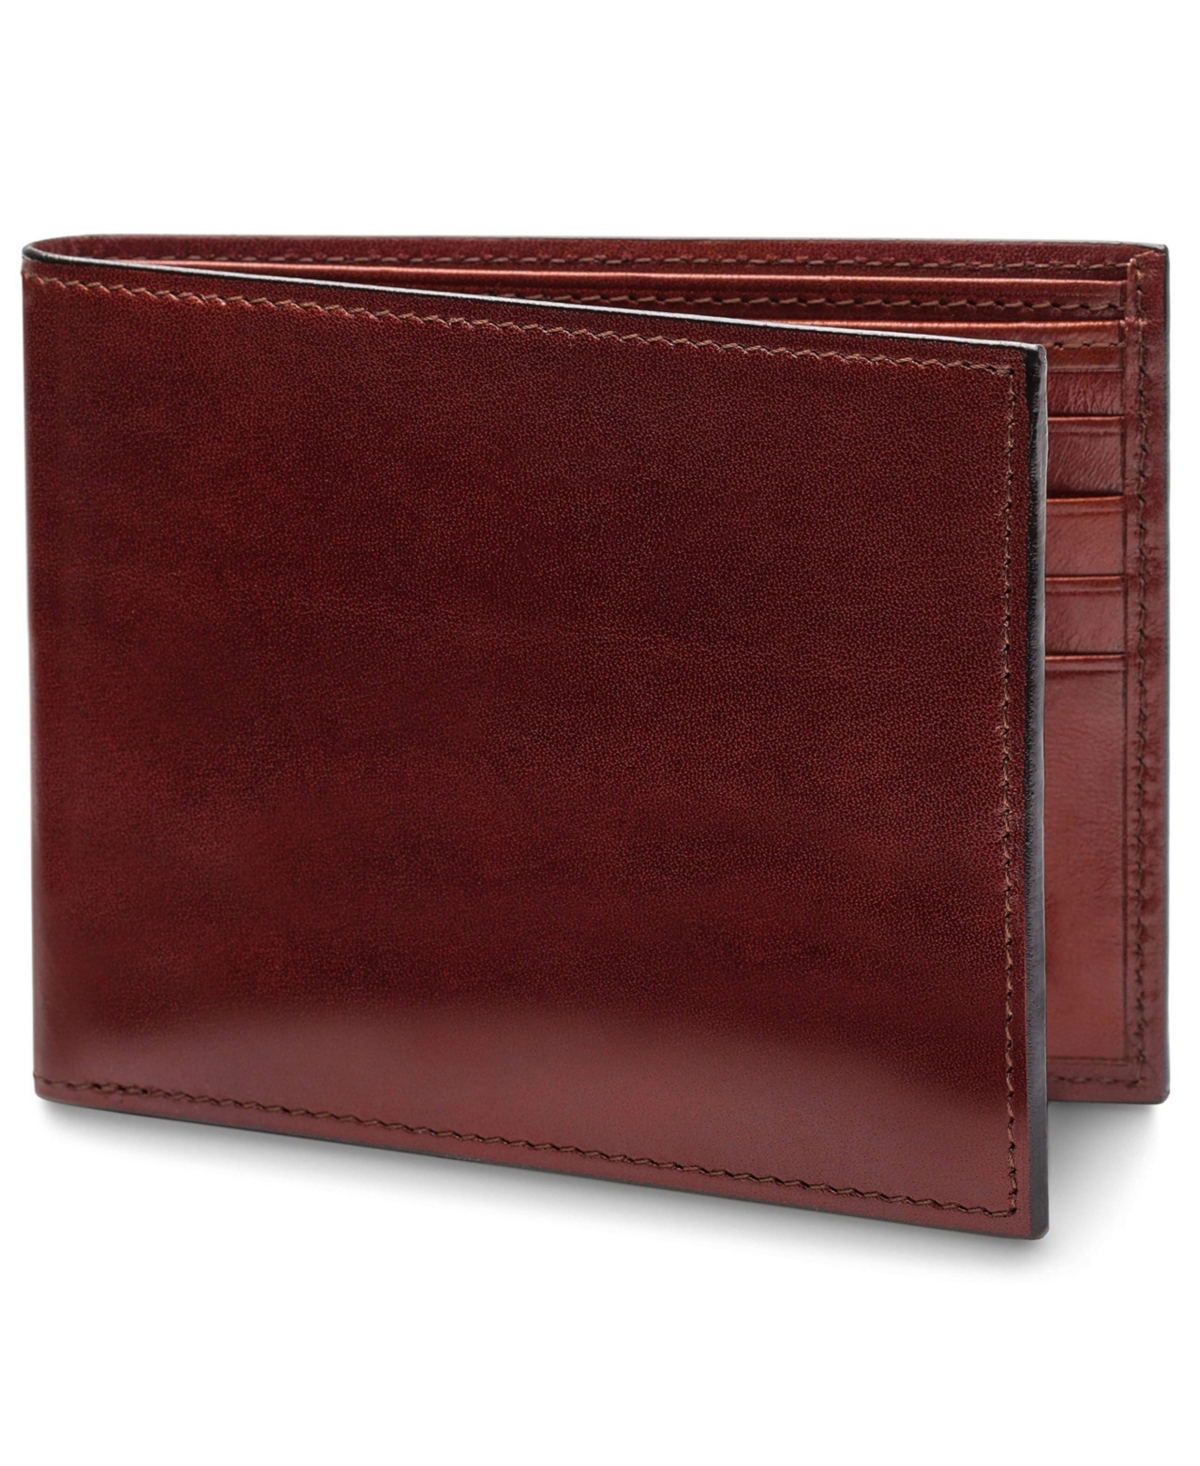 Men's 8 Pocket Wallet in Old Leather - Rfid - Brown